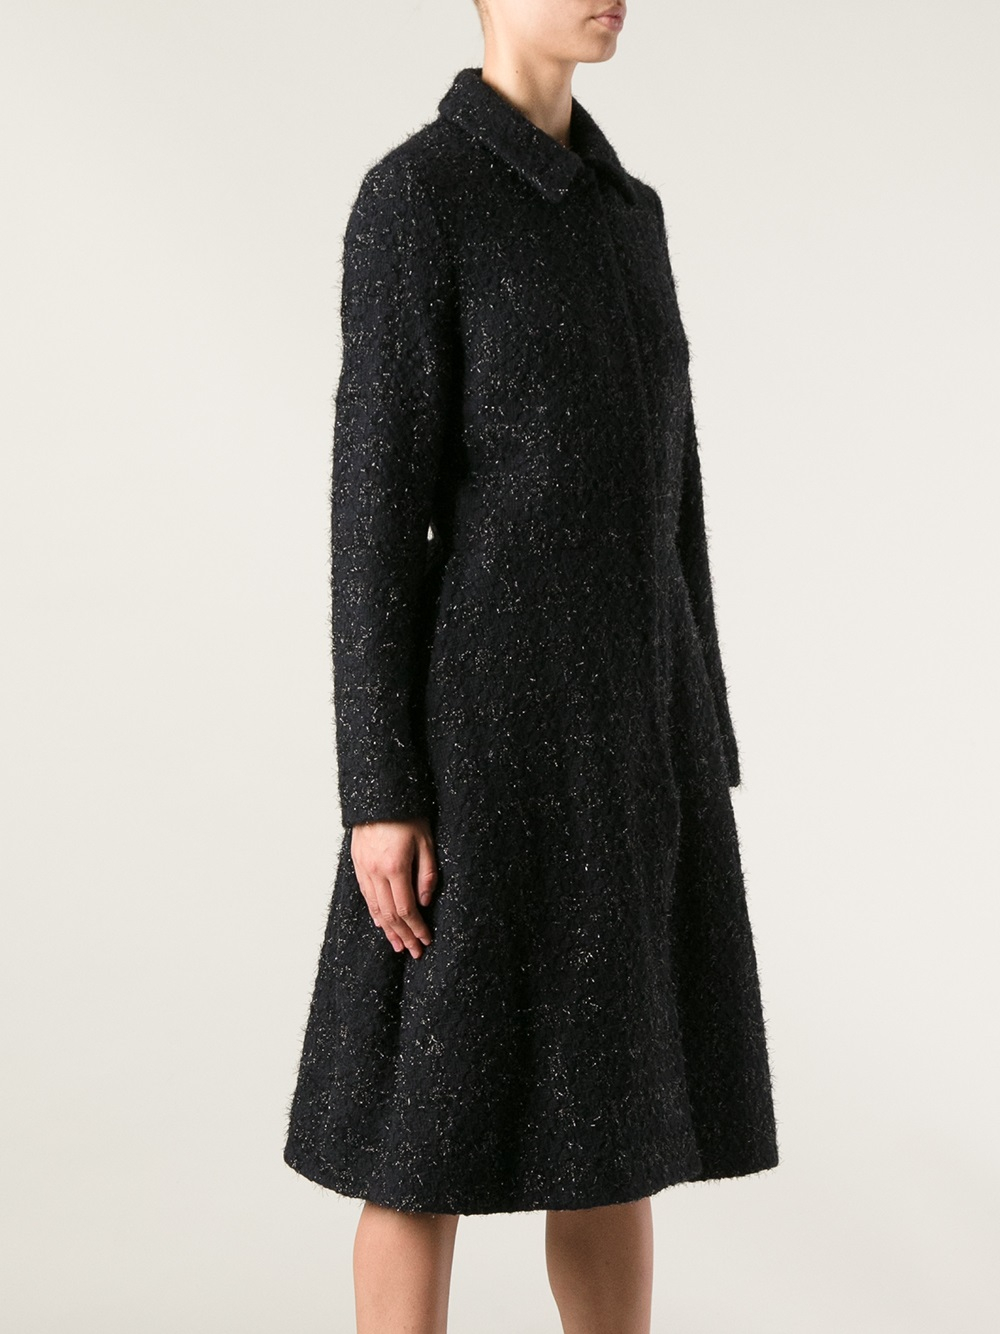 Lyst - Simone rocha Textured Coat in Black